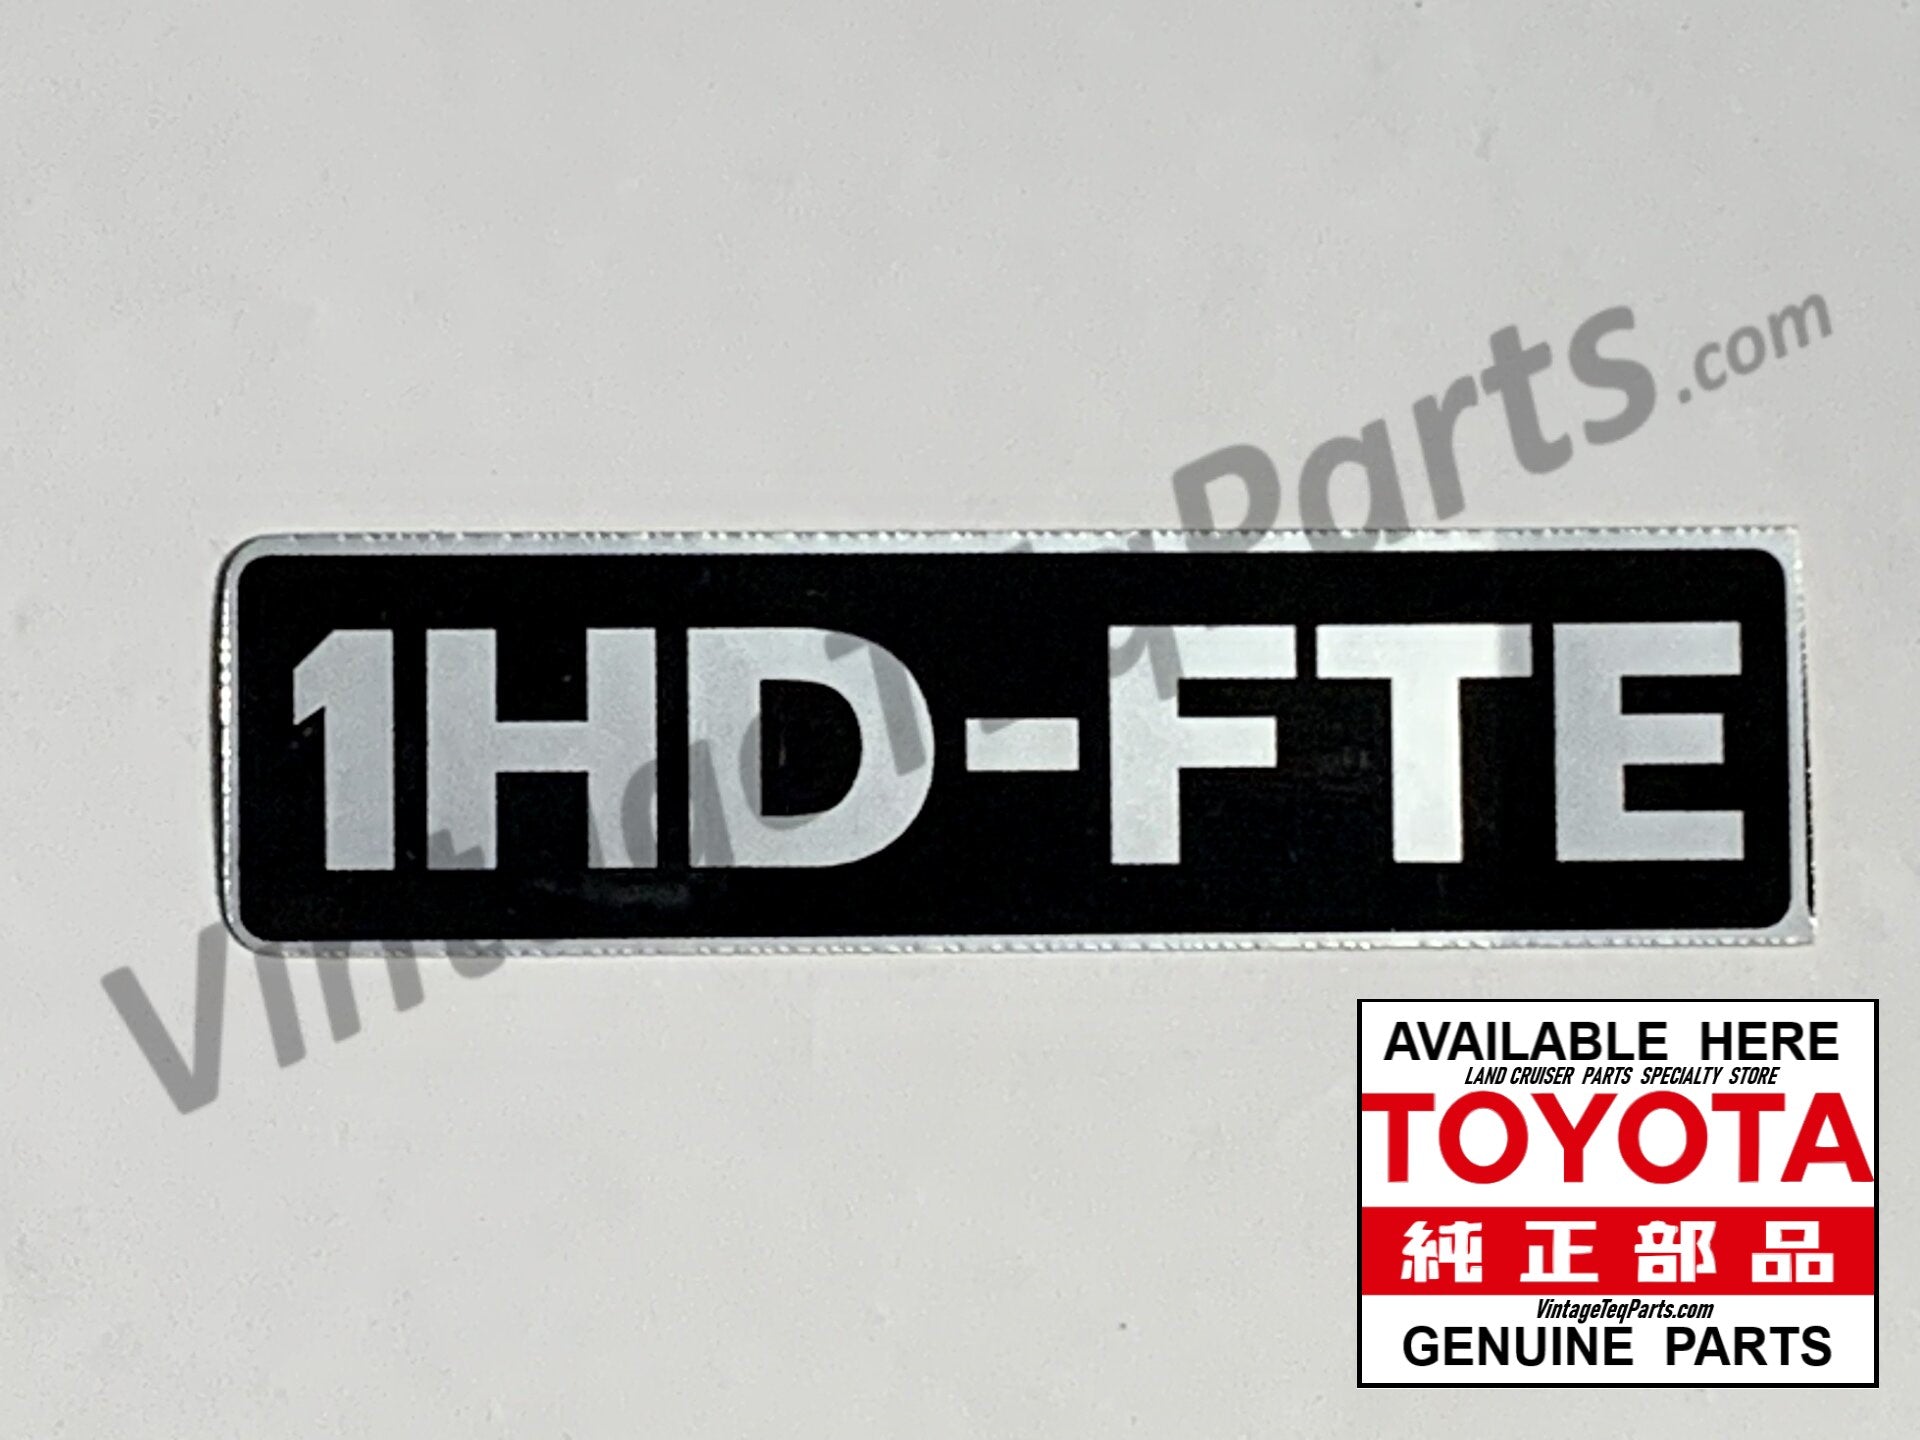 NOS OEM Genuine Toyota 1HD-FTE TURBO DIESEL Decal sticker Emblem JDM L –